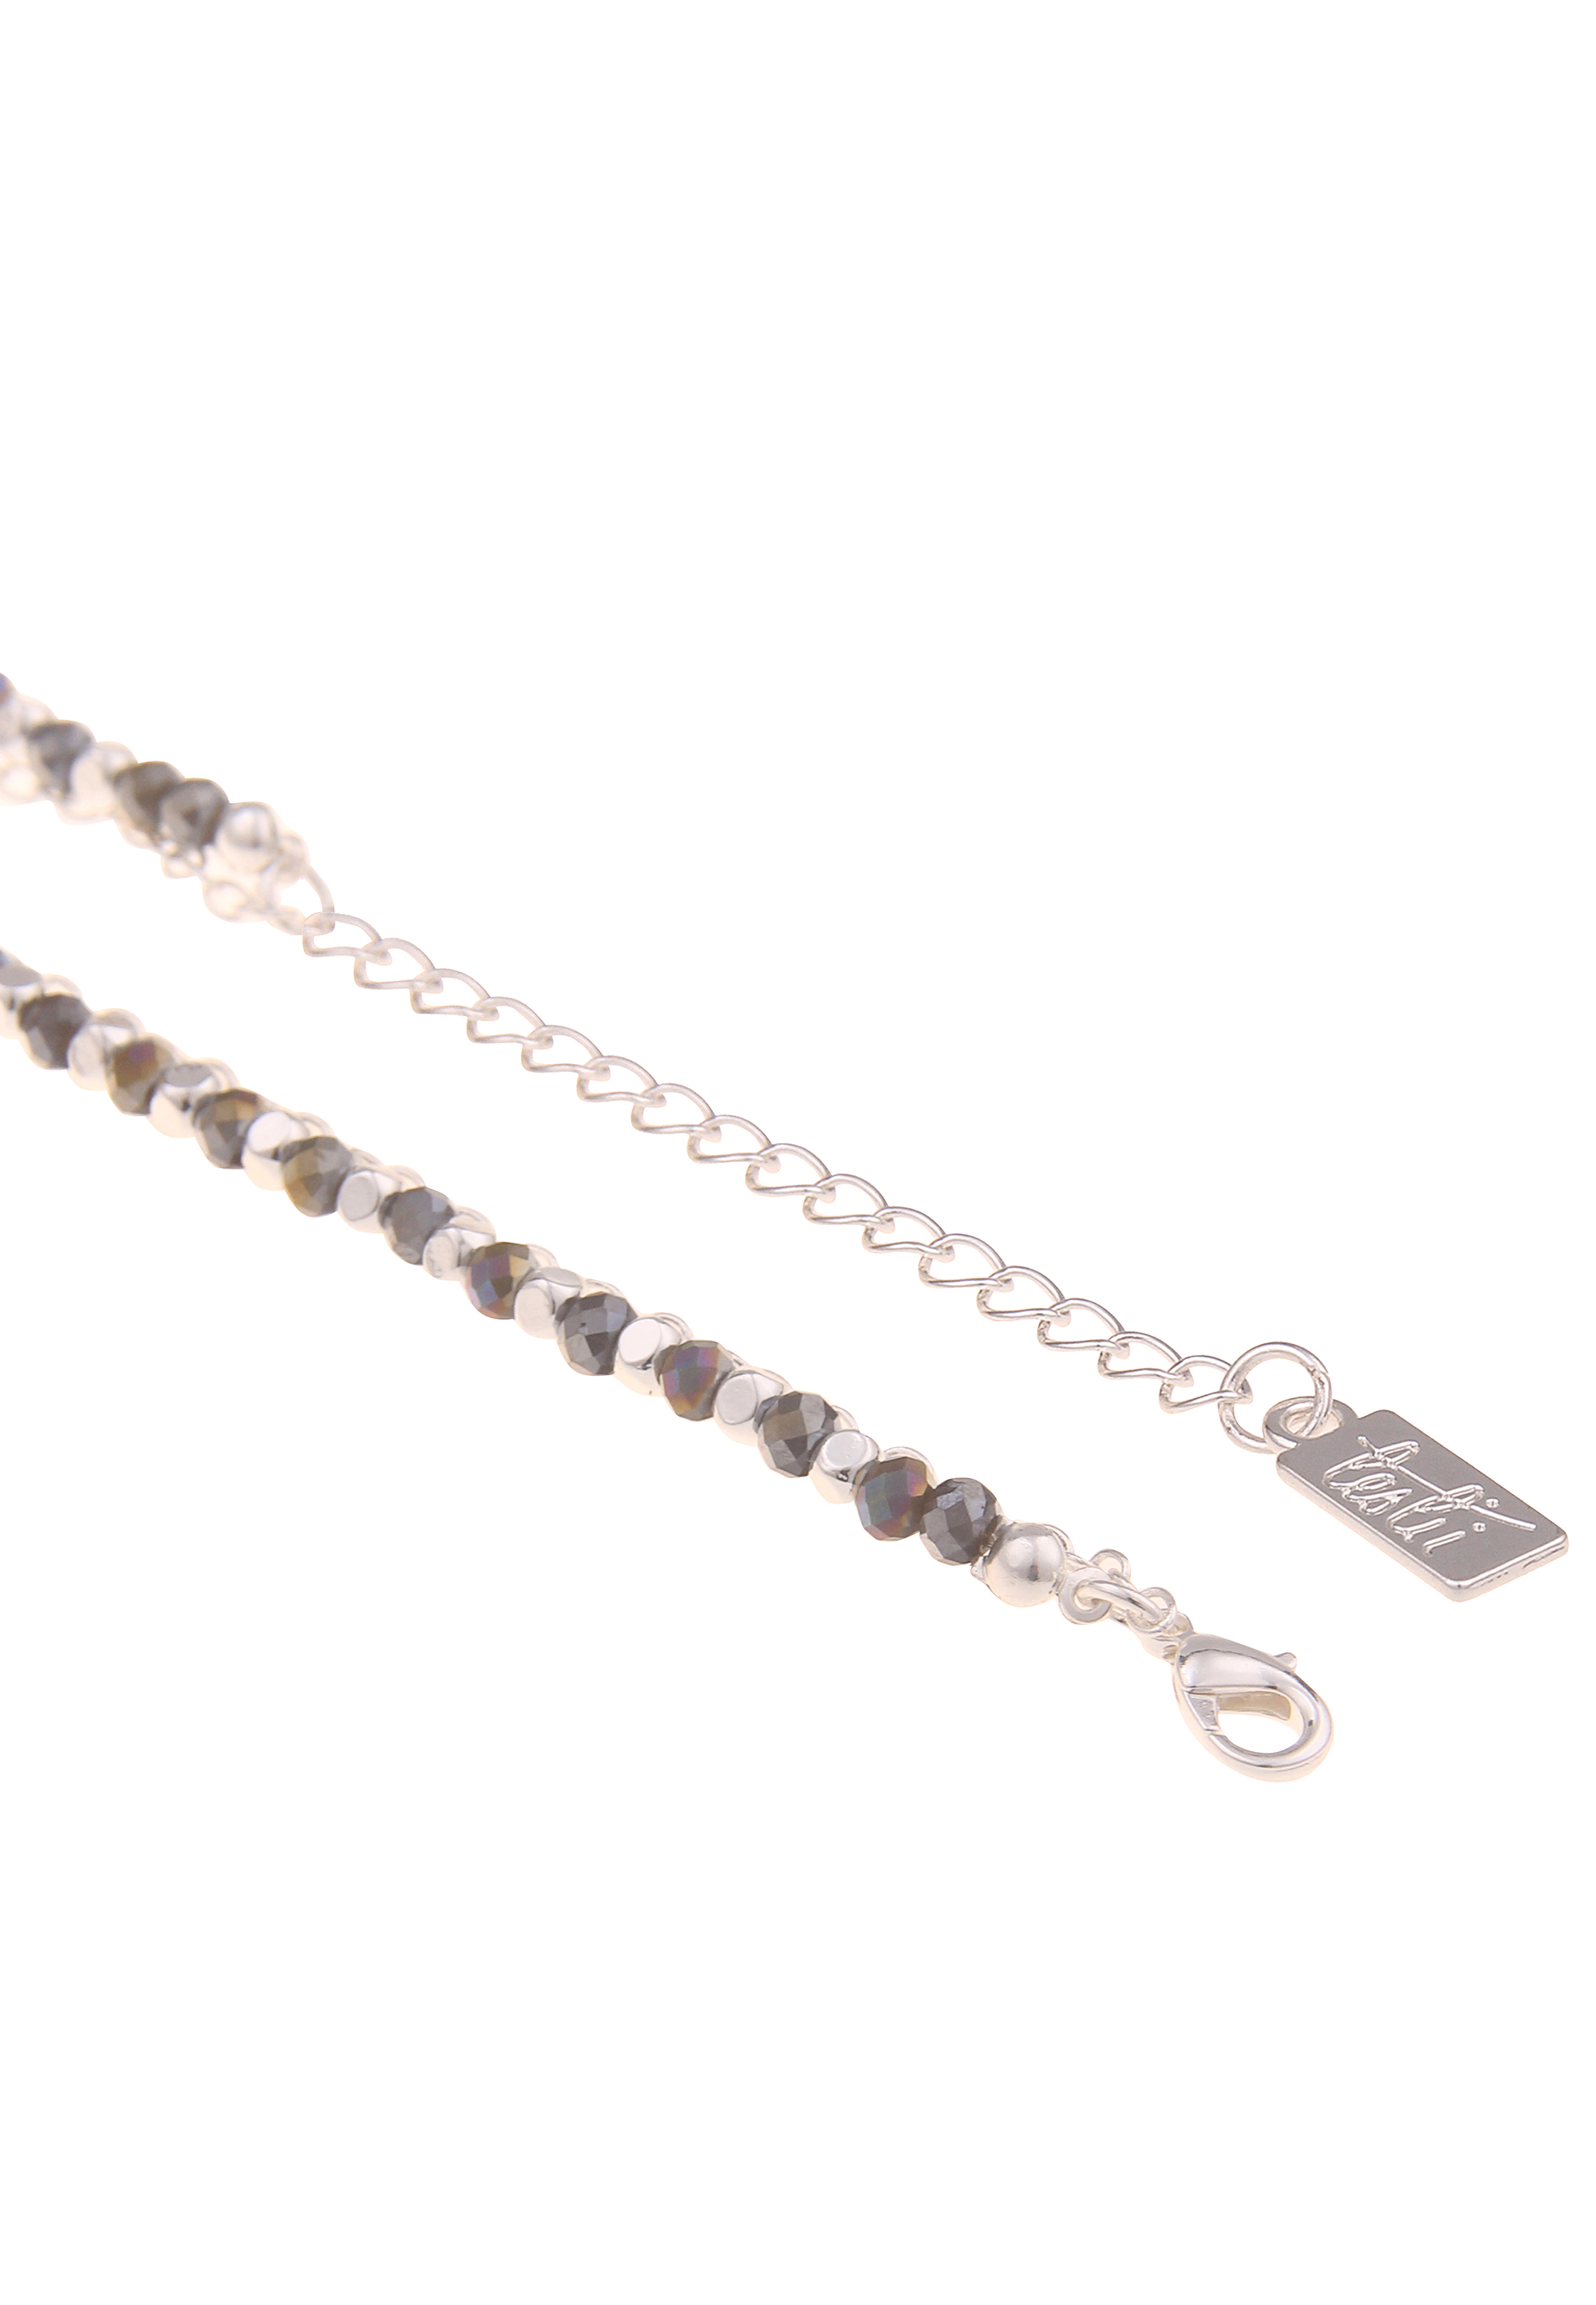 | Halskette | Damen-Kette Silber Leslii Glasperlen Gunmetal Grau Schwarz lange Ketten | Layering Shop Halsketten Online Leslii lange